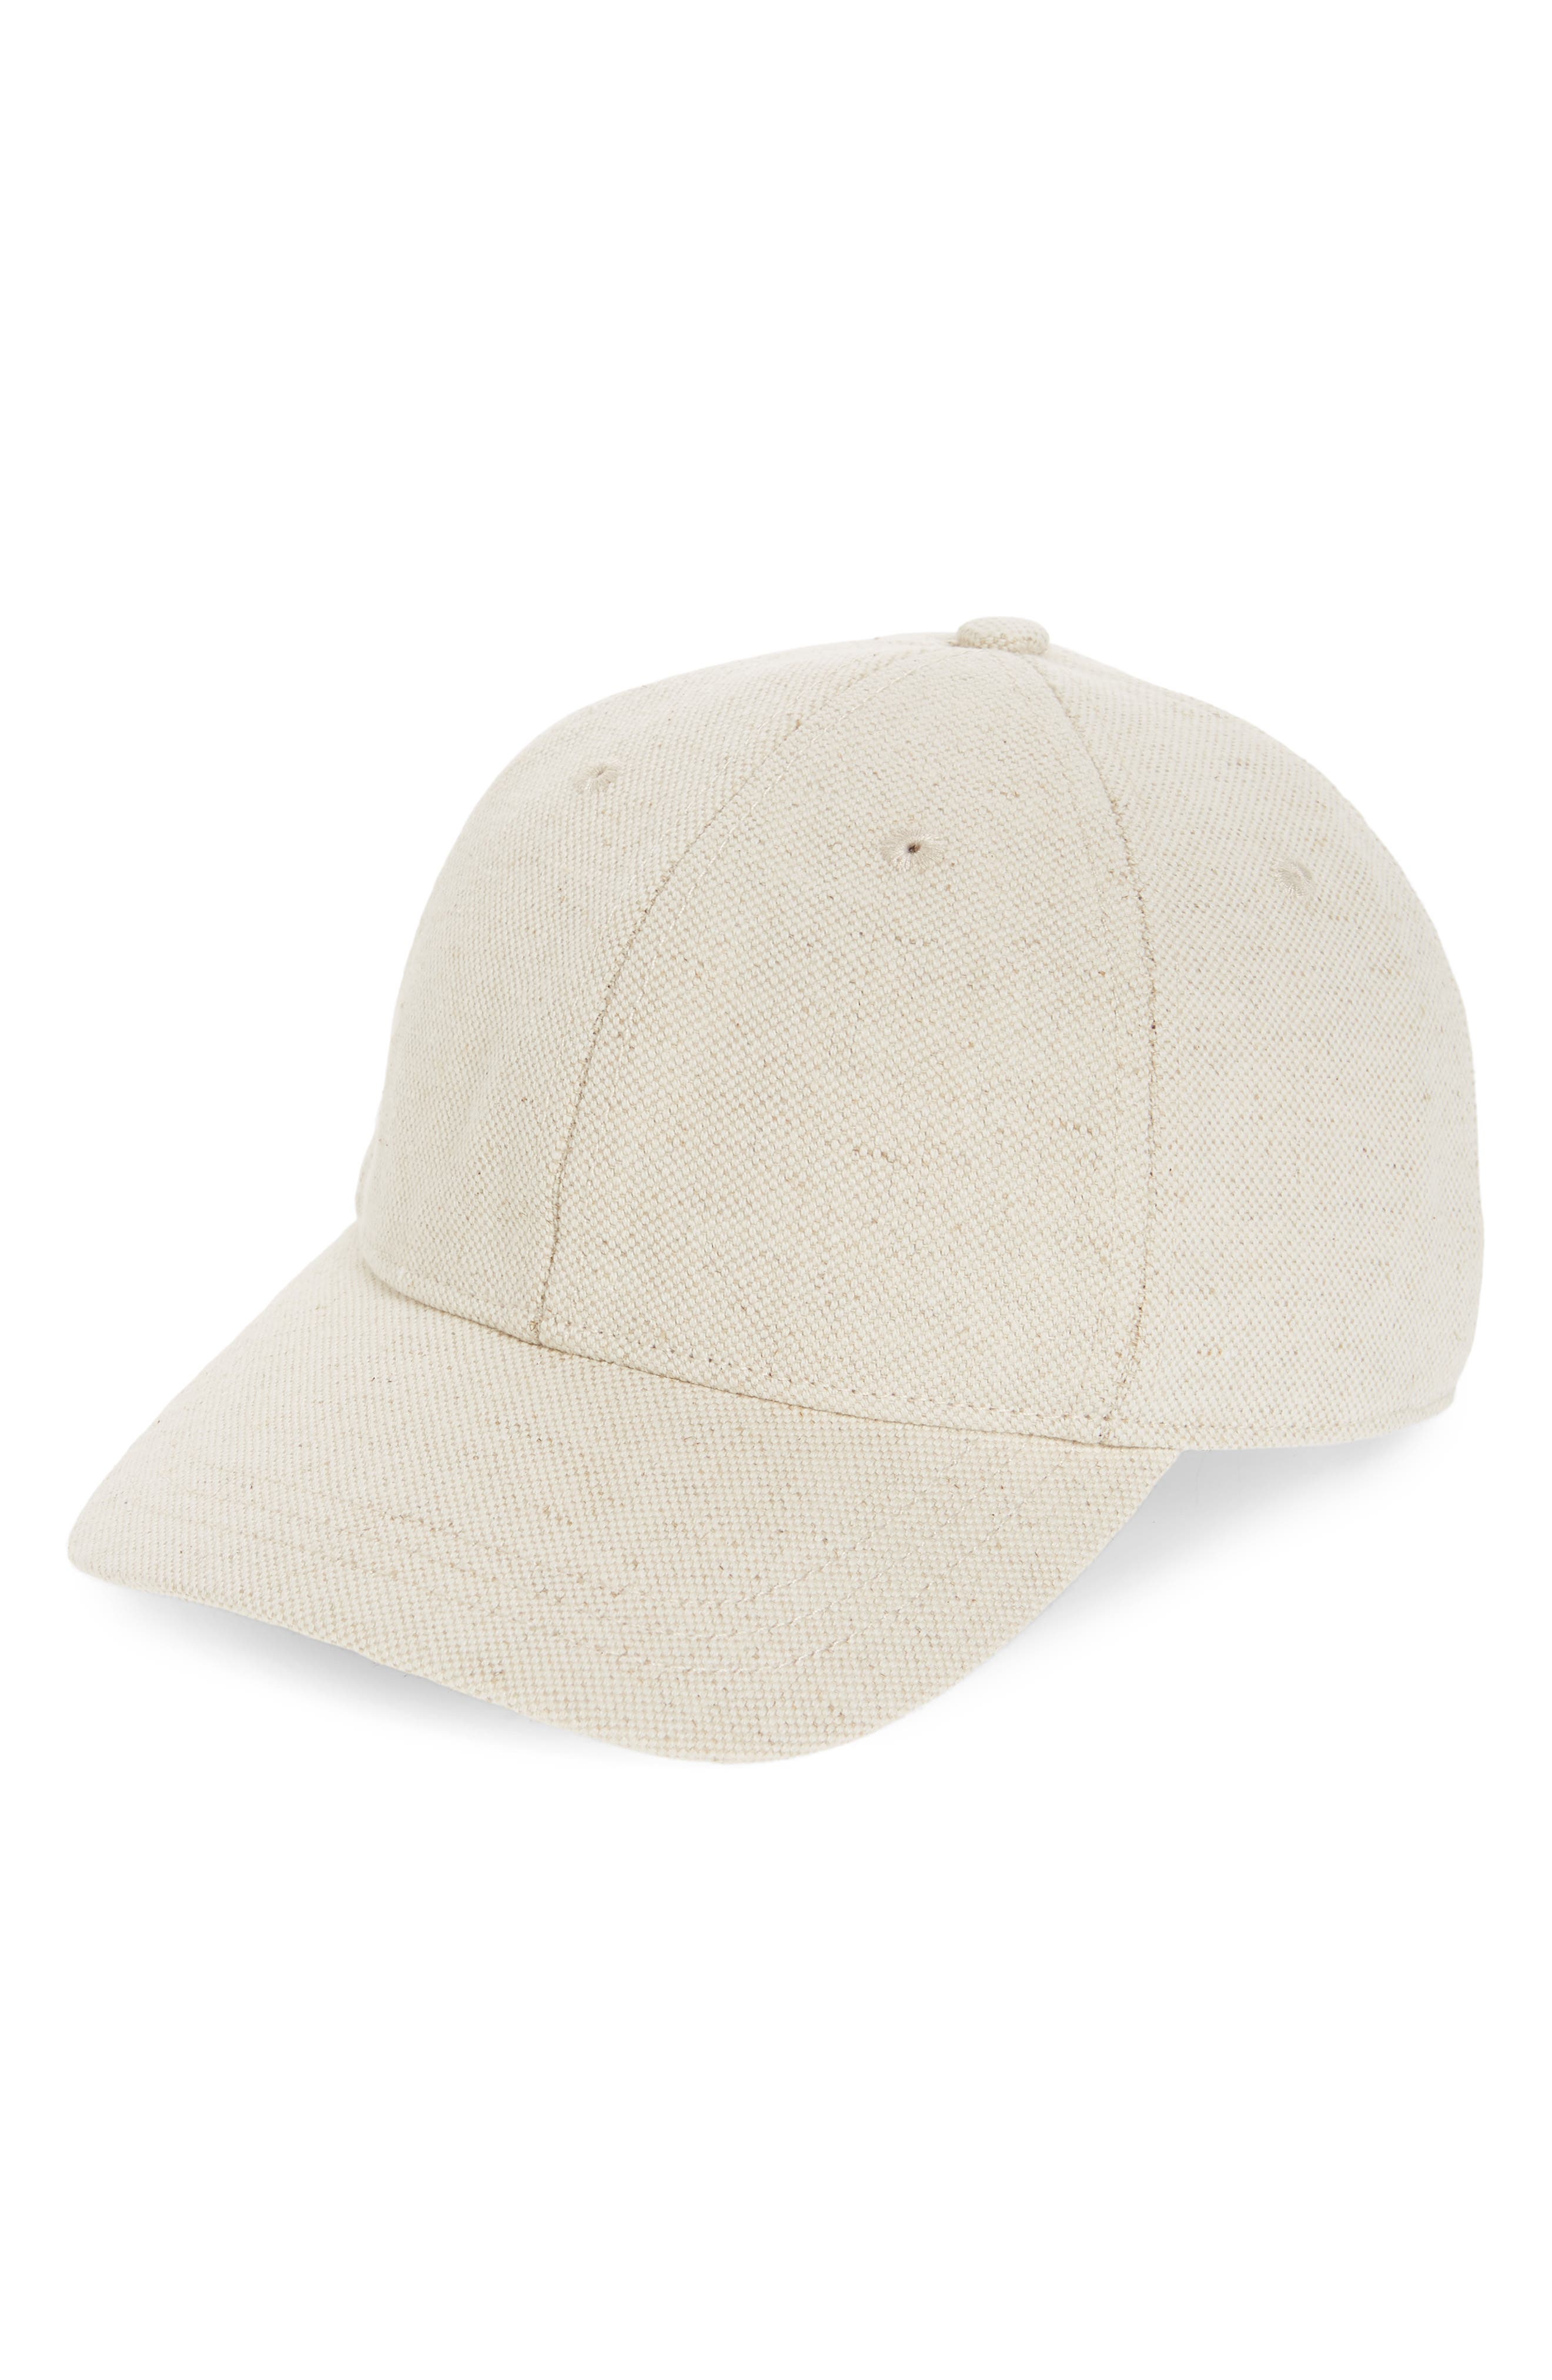 women's cotton baseball caps